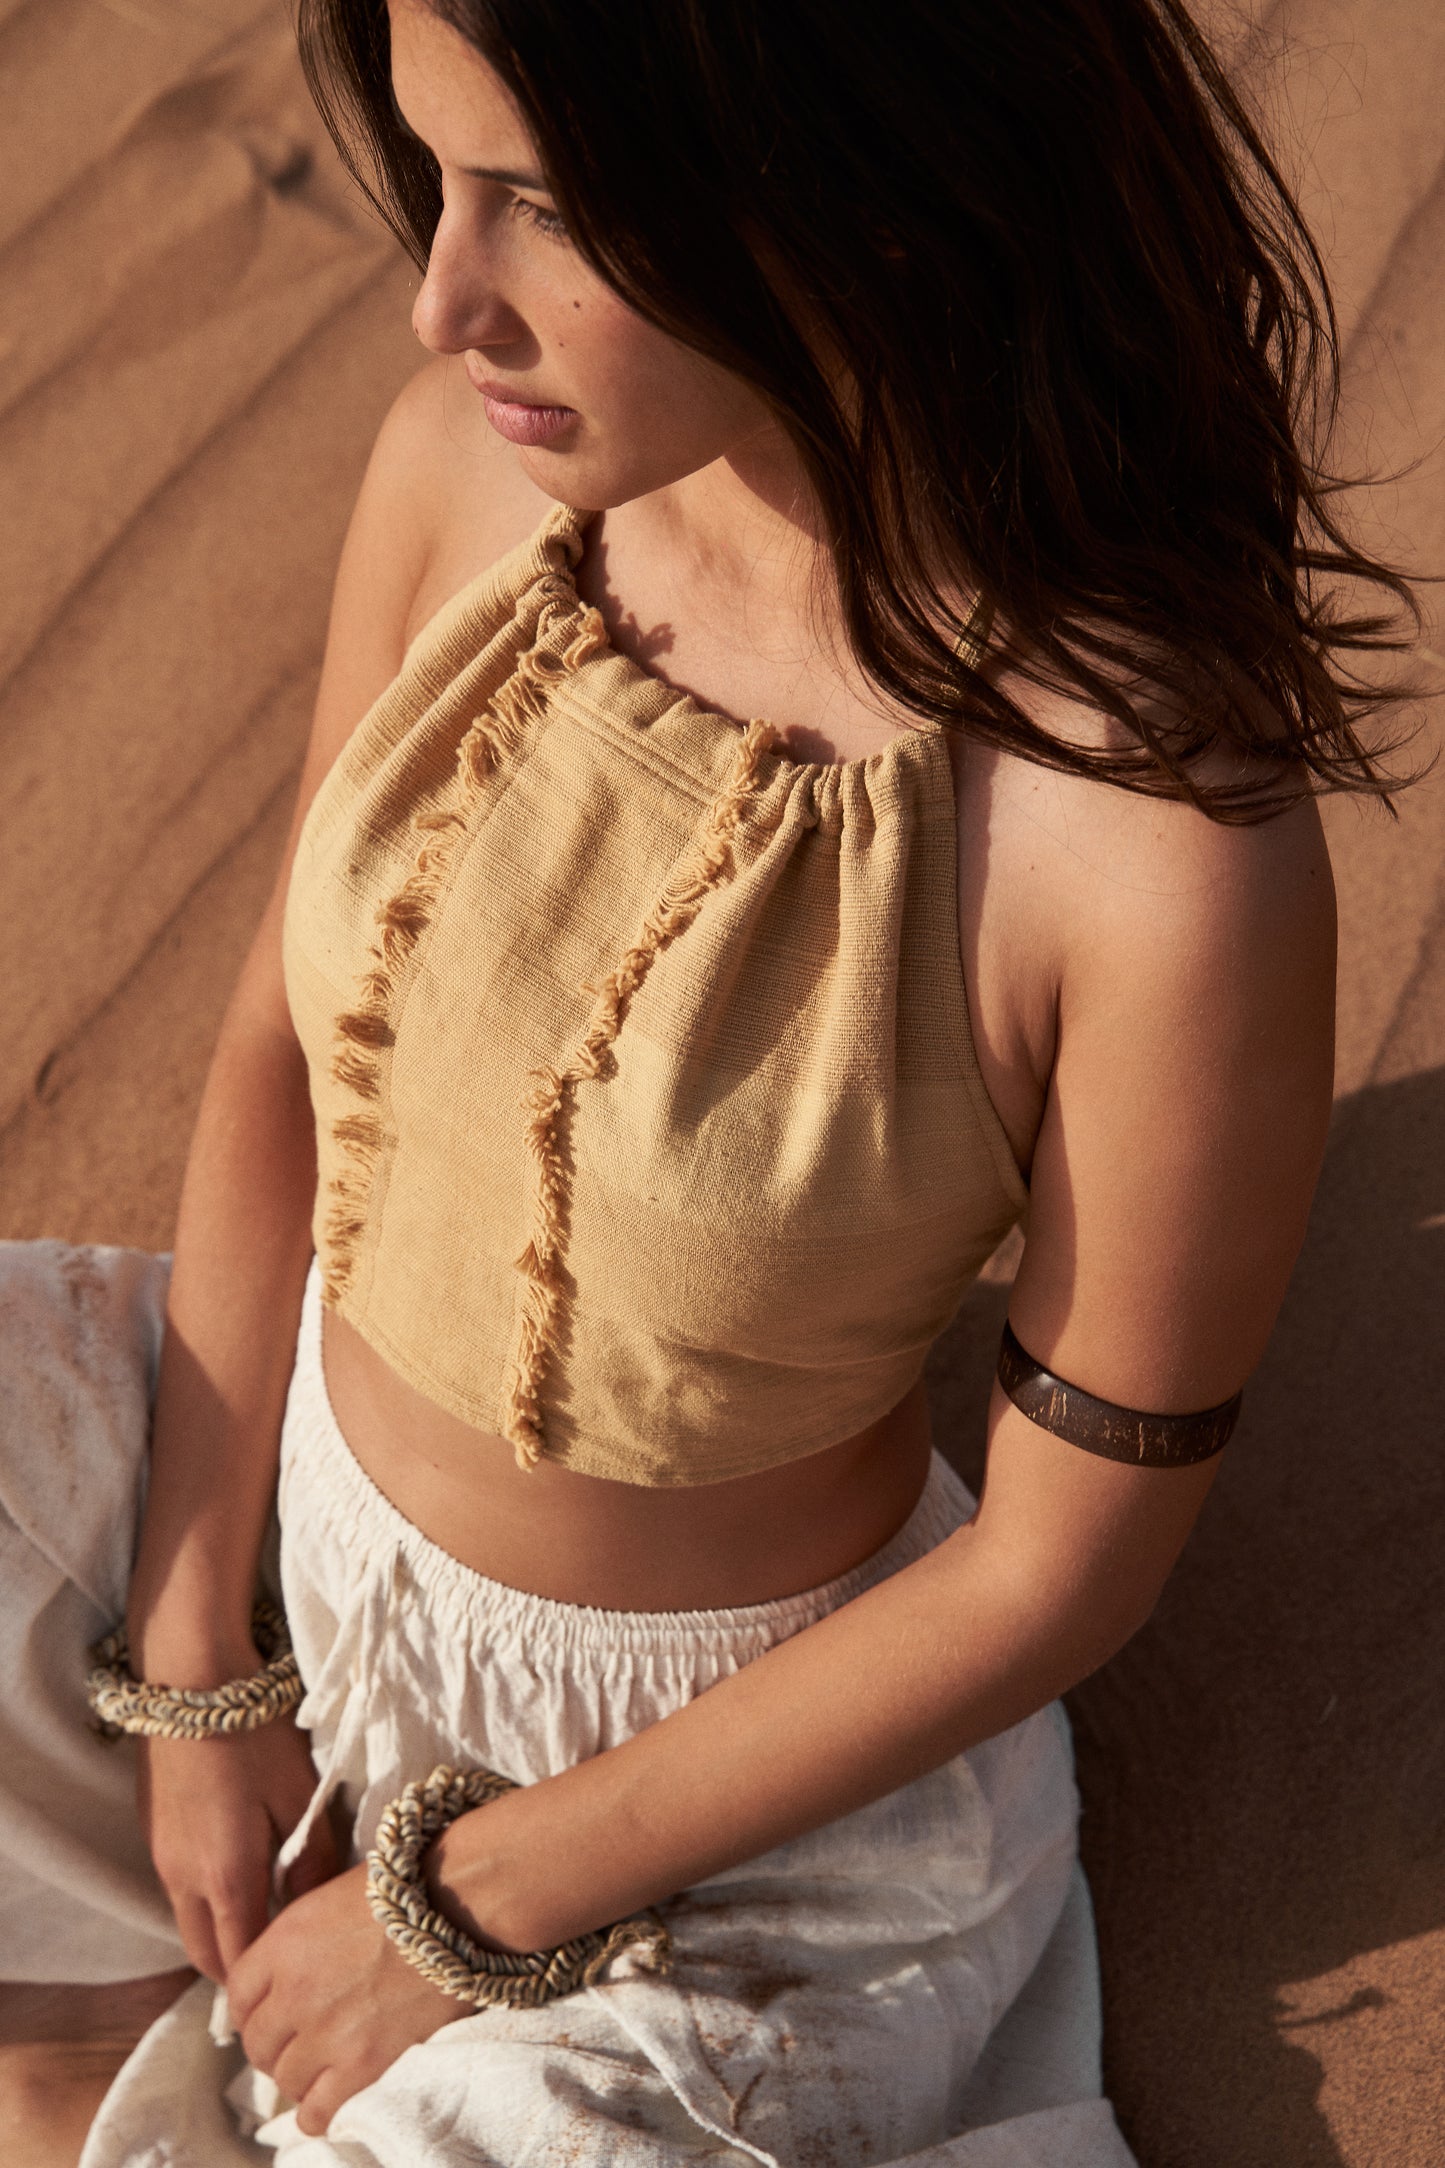 Desert Brown Tie Top ⋗⋙ Natural Dyed Handwoven Khadi Cotton